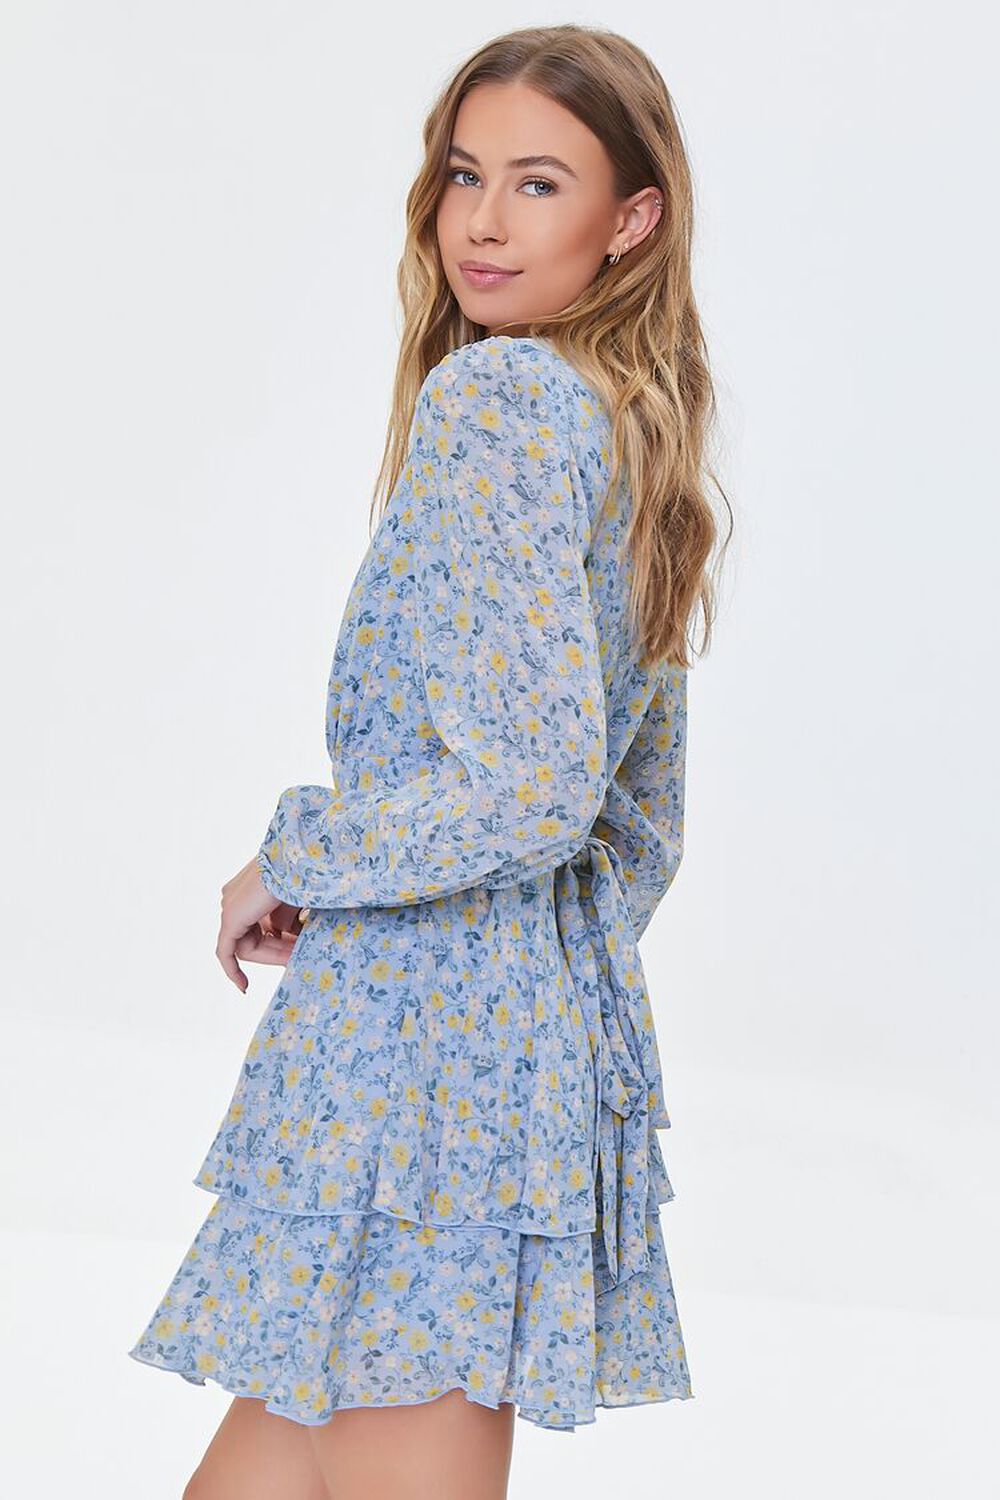 BLUE/MULTI Ditsy Floral Chiffon Mini Dress, image 2